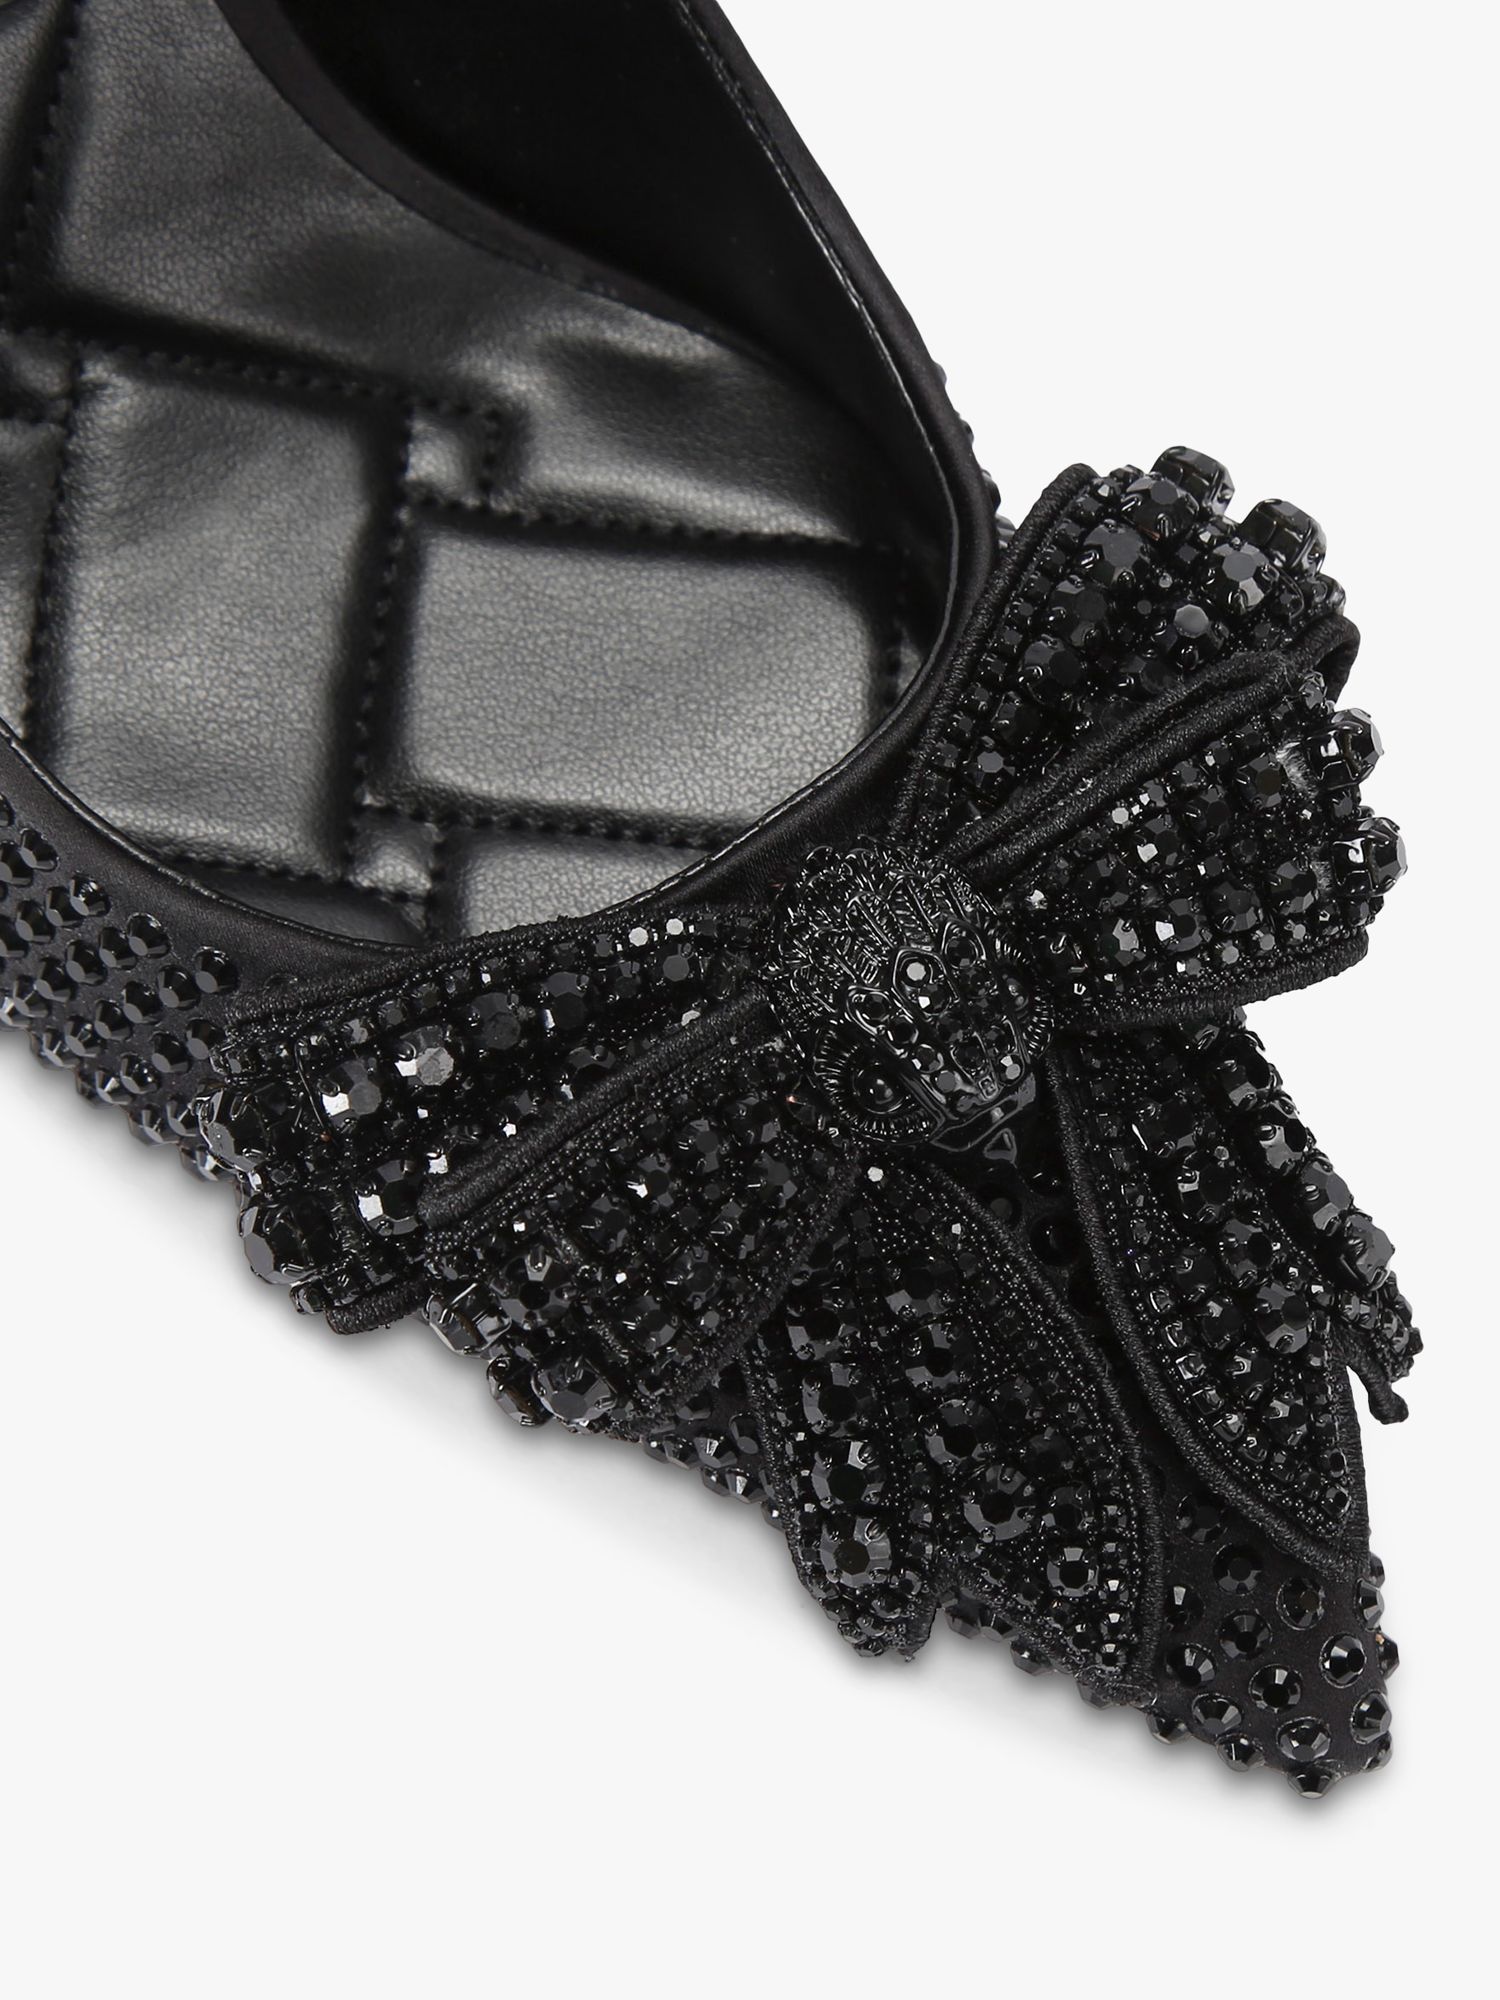 Buy Kurt Geiger London Belgravia 85 Crystal Bow Court Shoes, Black Online at johnlewis.com